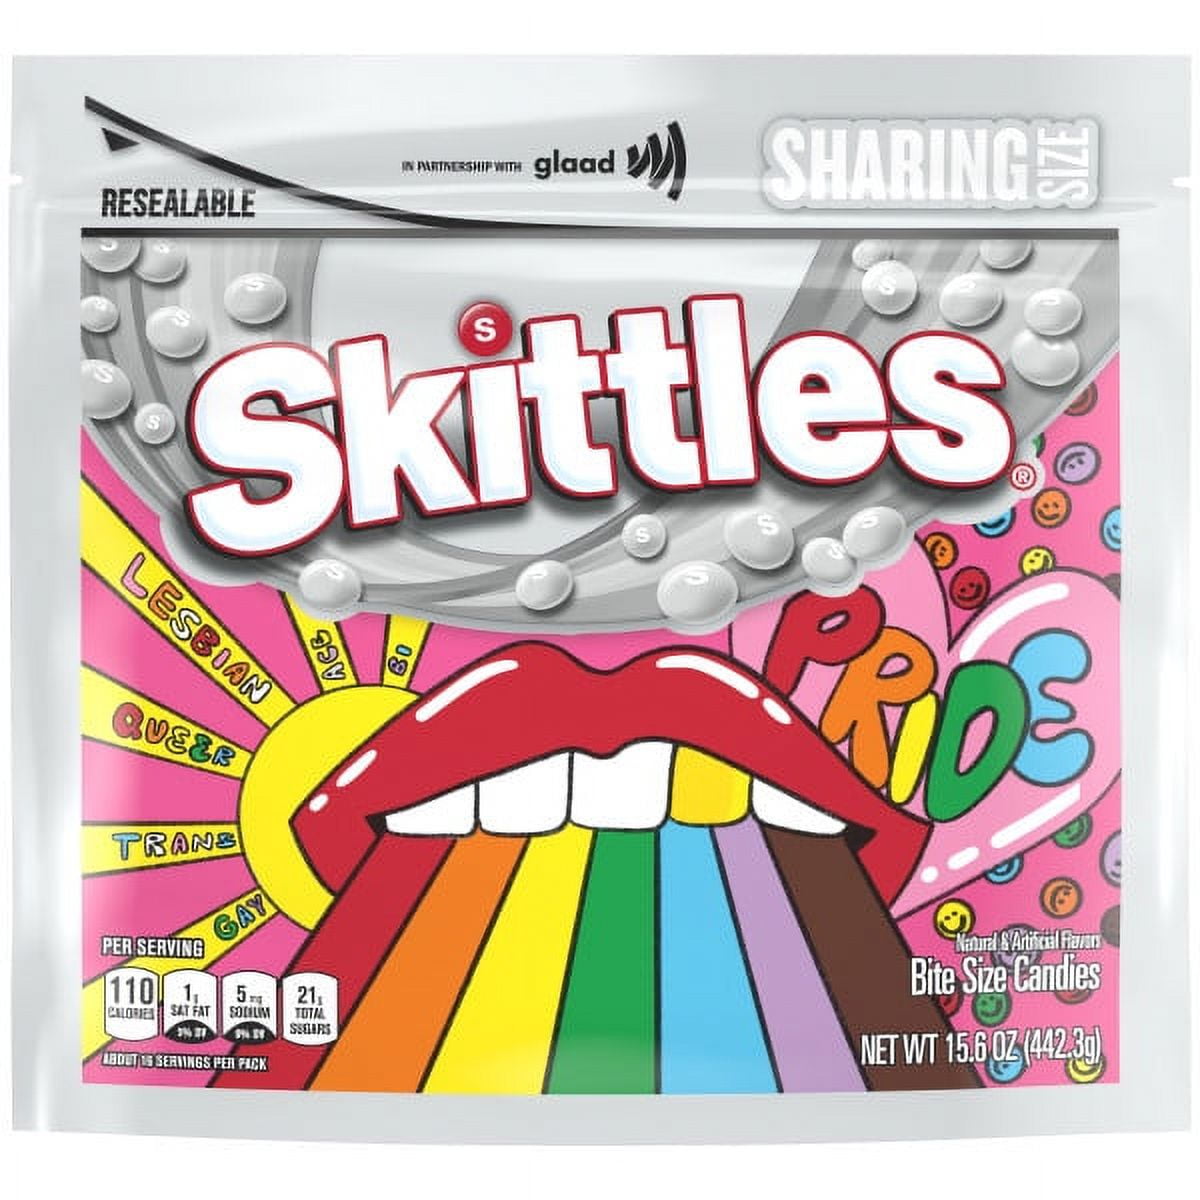 Skittles Candies, Bite Size, Sharing Size - 15.60 oz